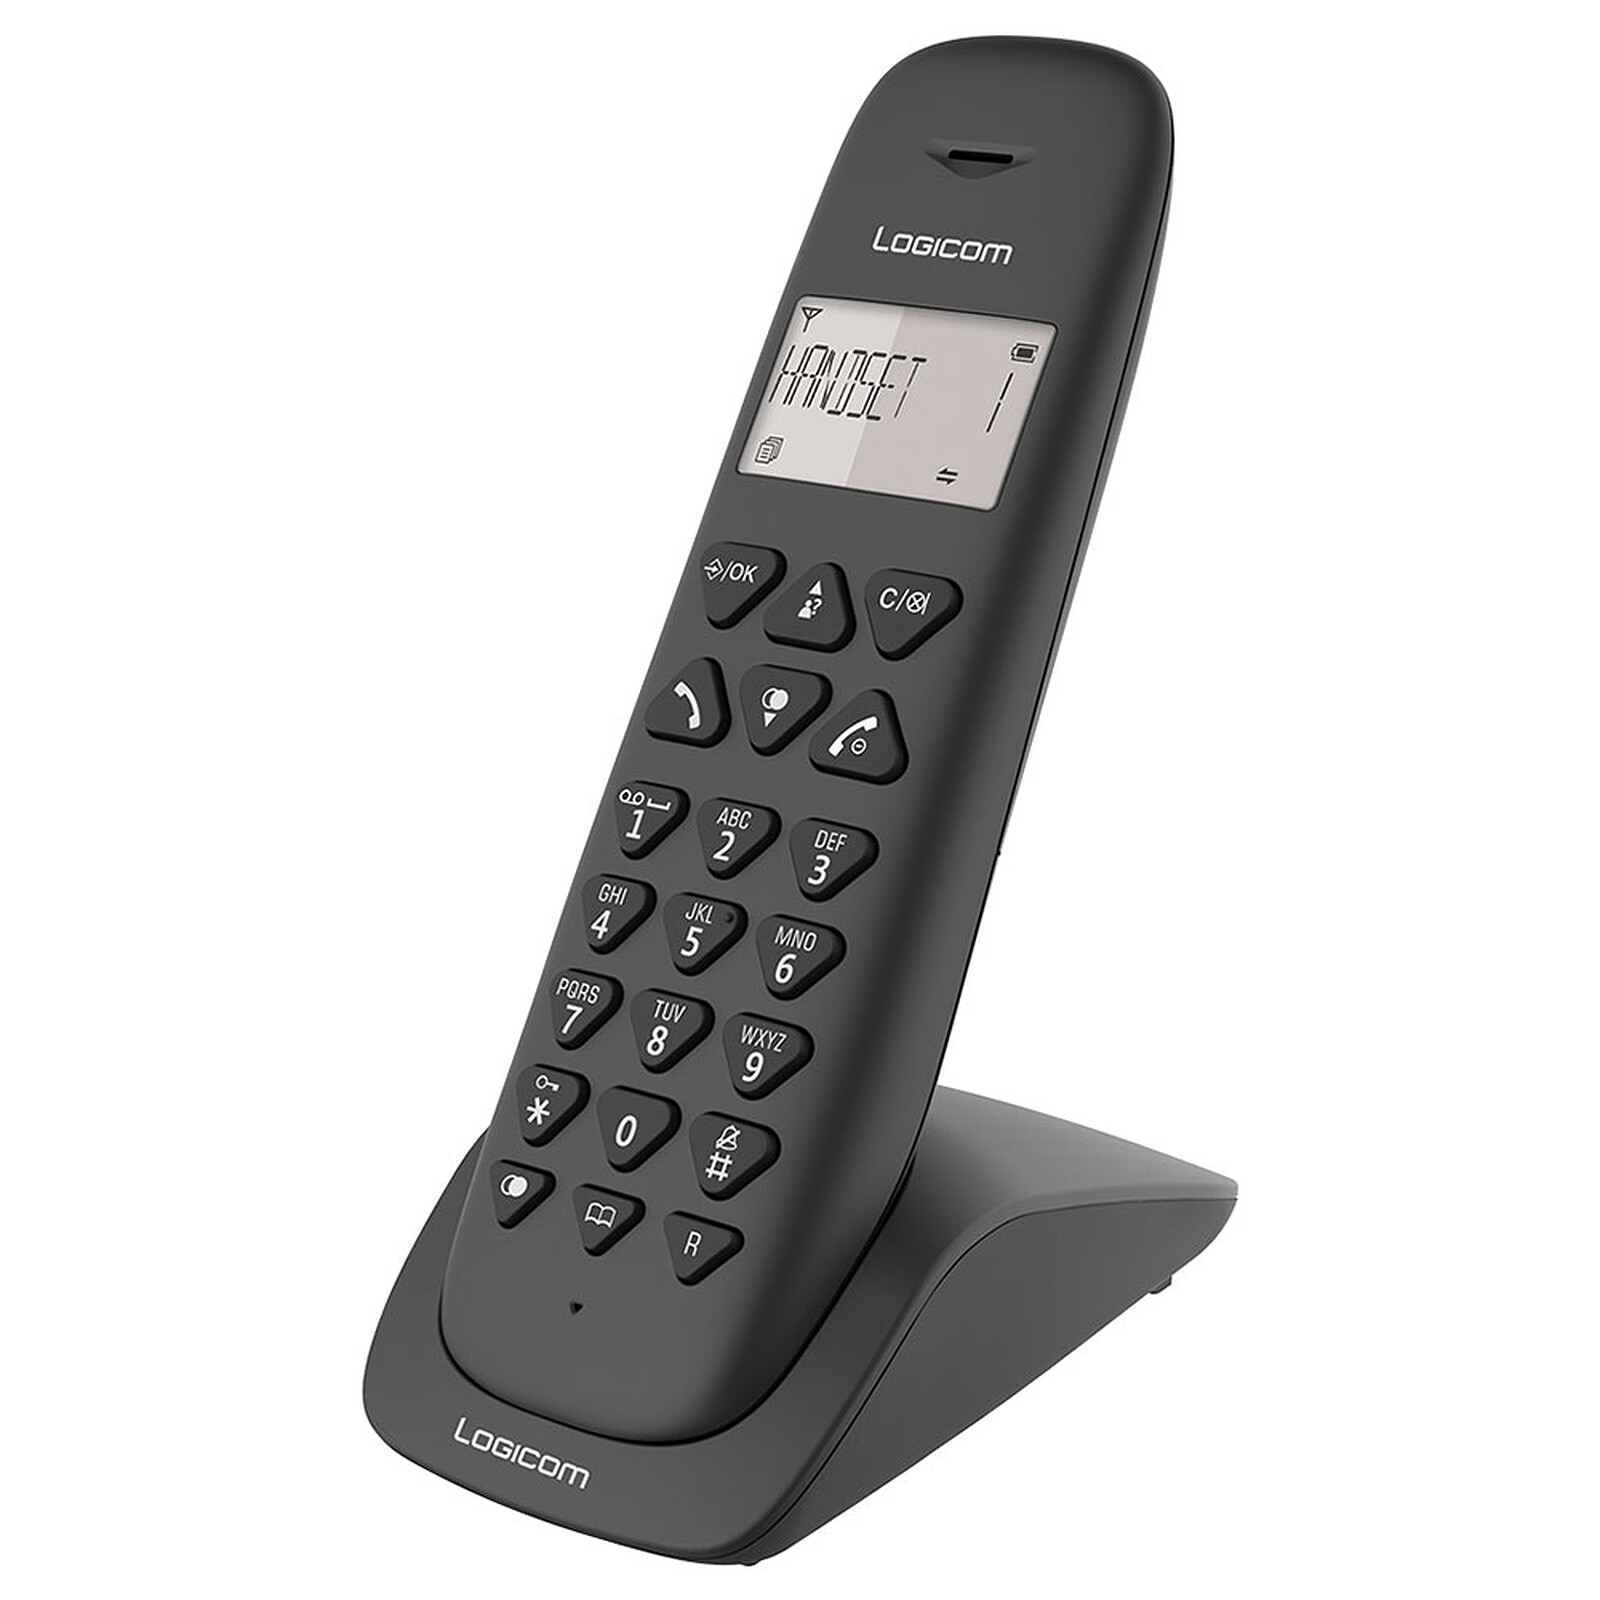 Alcatel XL585 Voice Duo Blanco - Teléfono inalámbrico - LDLC